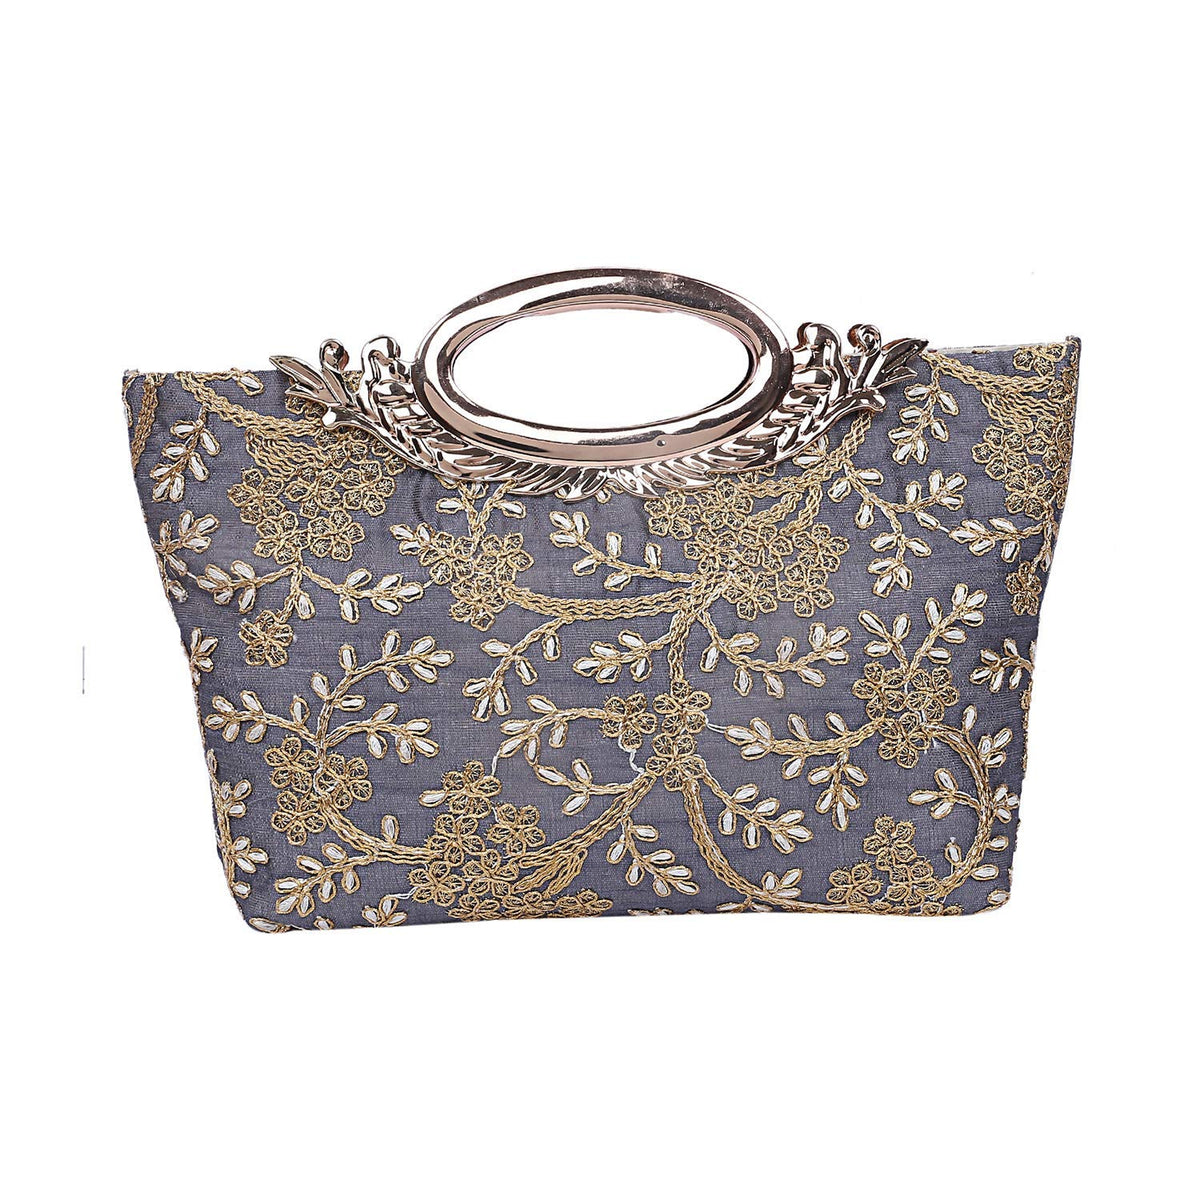 Heart Home Women's Silk Clutch Handbag (Grey) - CTHH11276